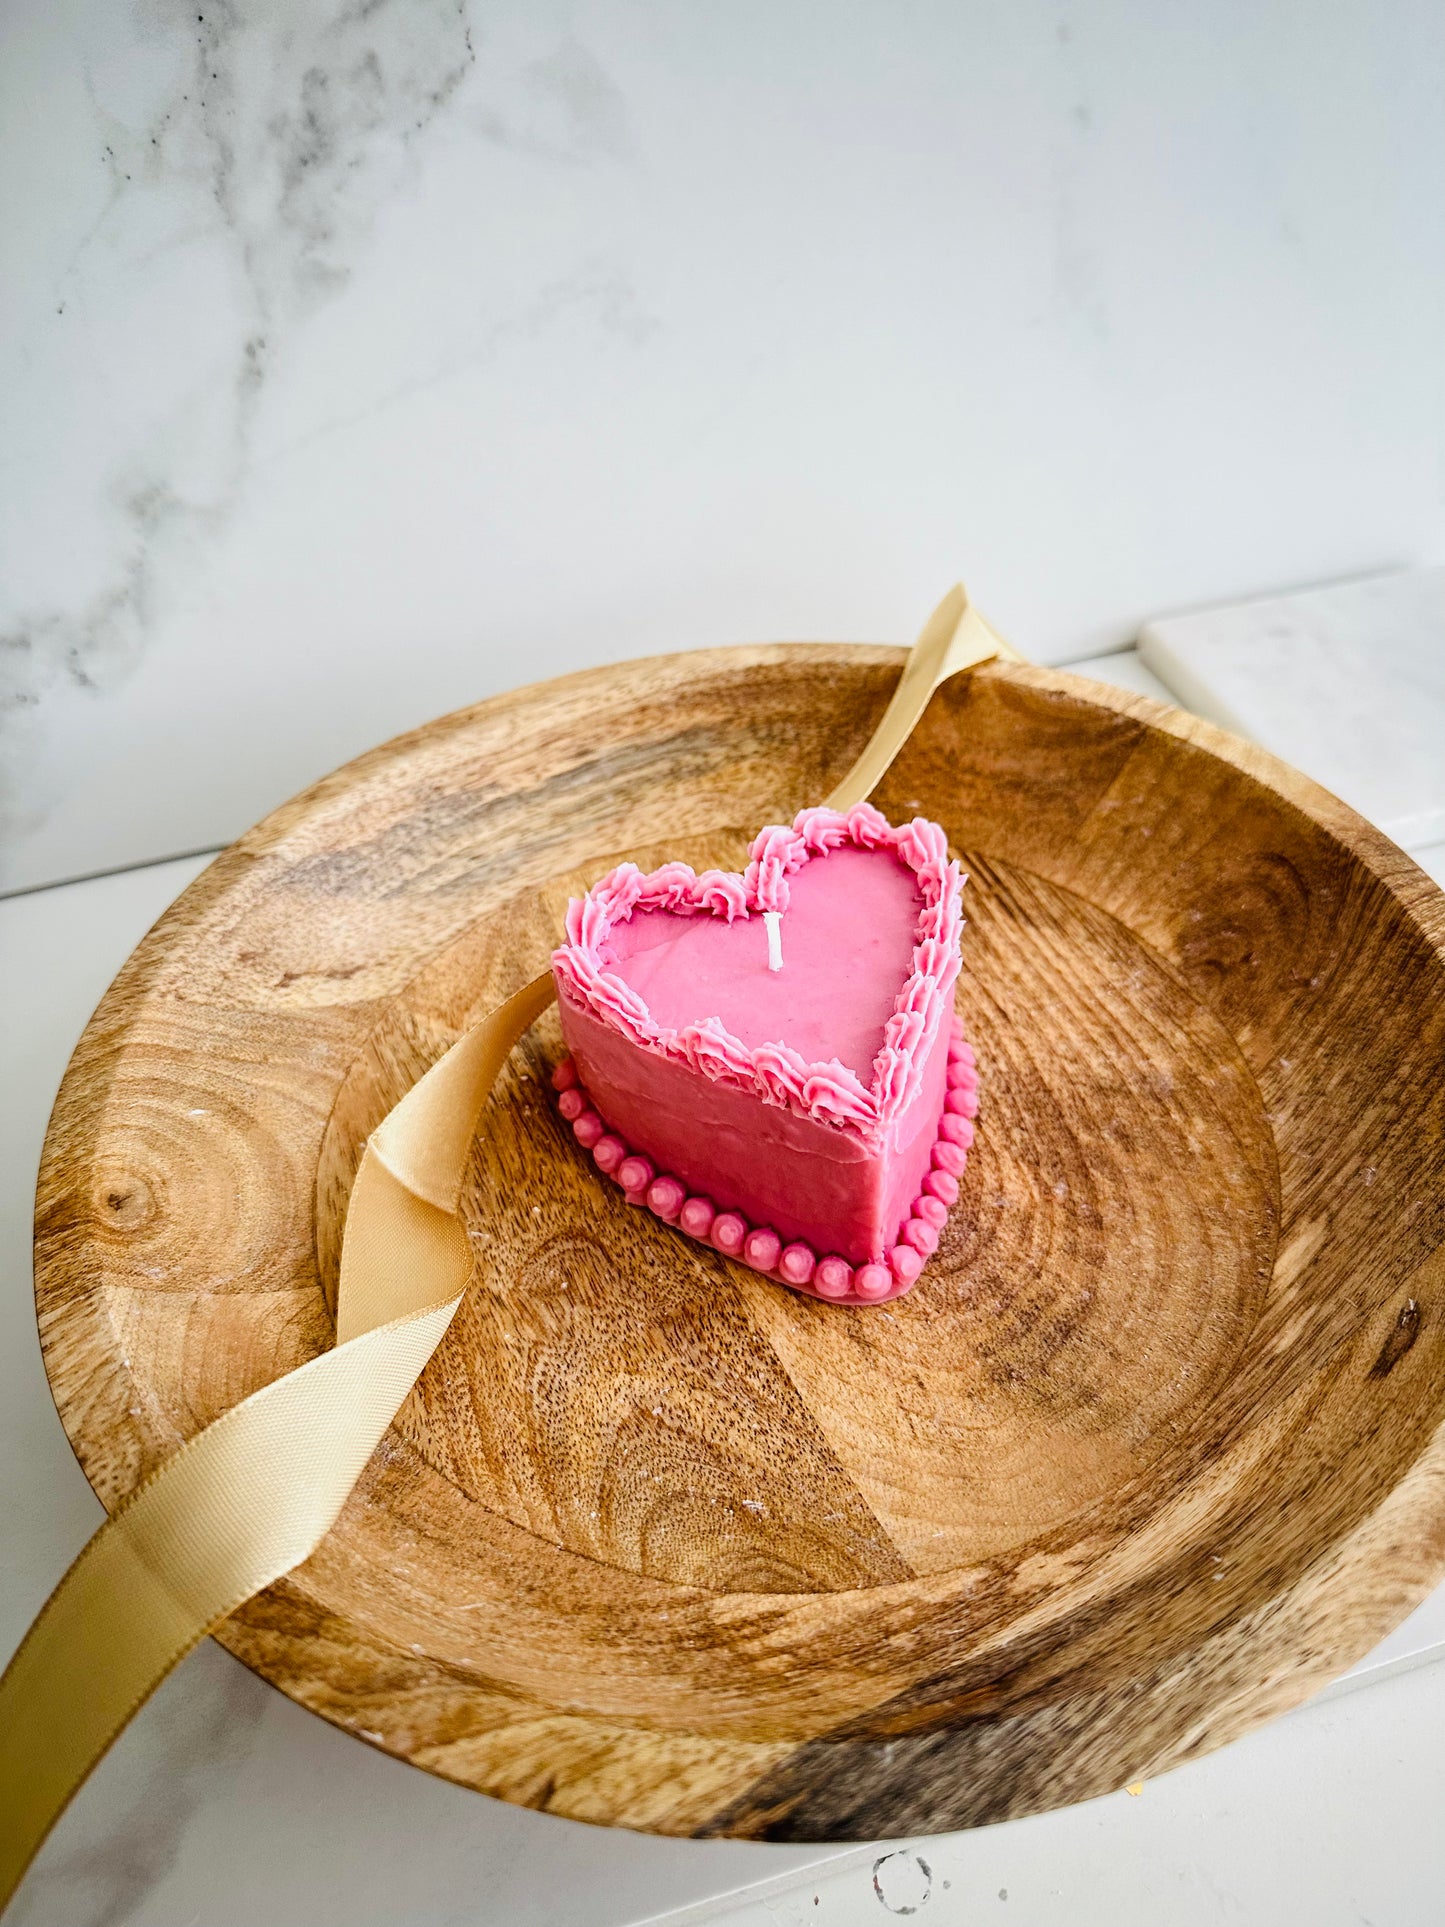 Heart shaped cake candle